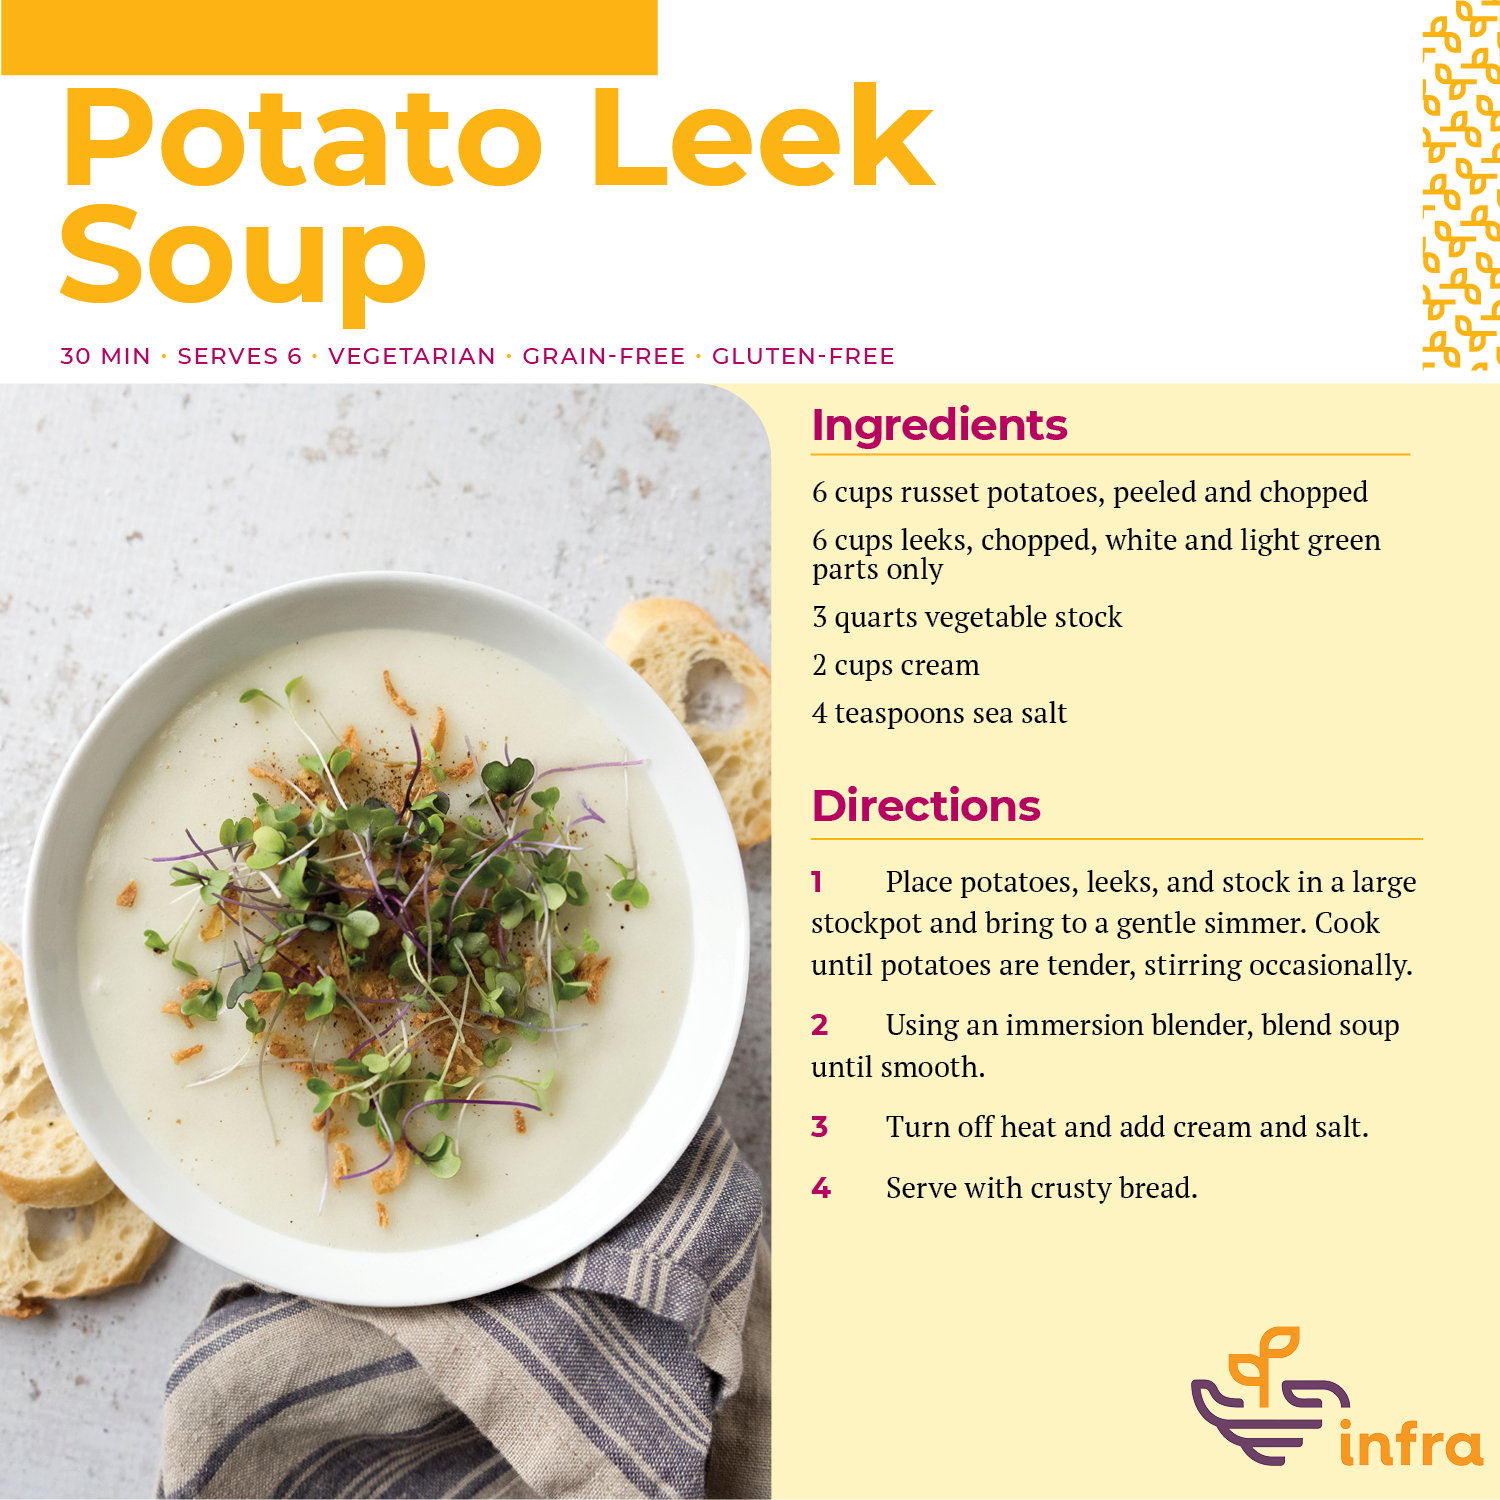 Potato Leek Soup Recipe and Image.png